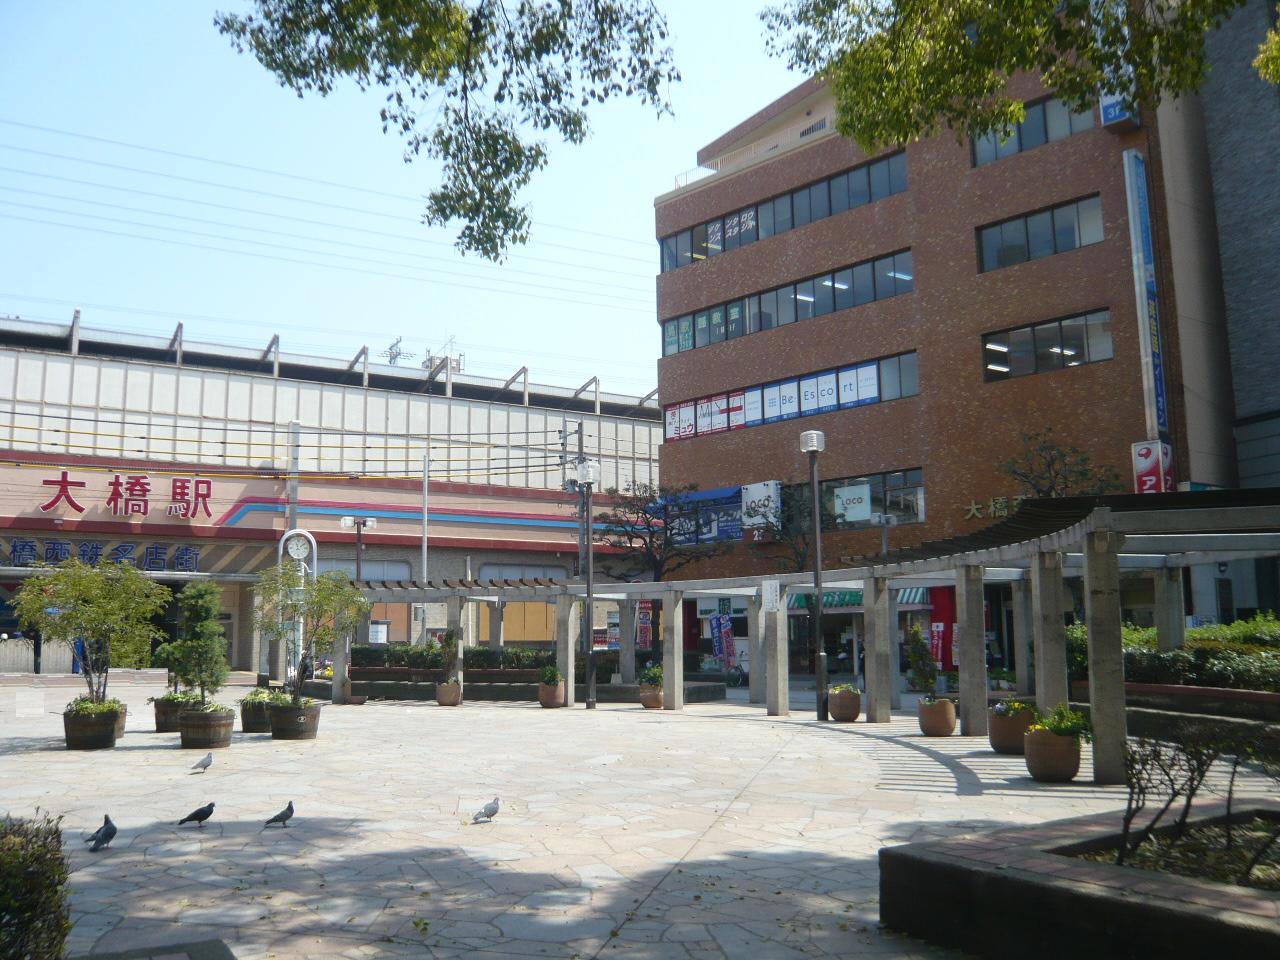 Shopping centre. 810m to Ohashi Nishitetsu Meitengai (shopping center)